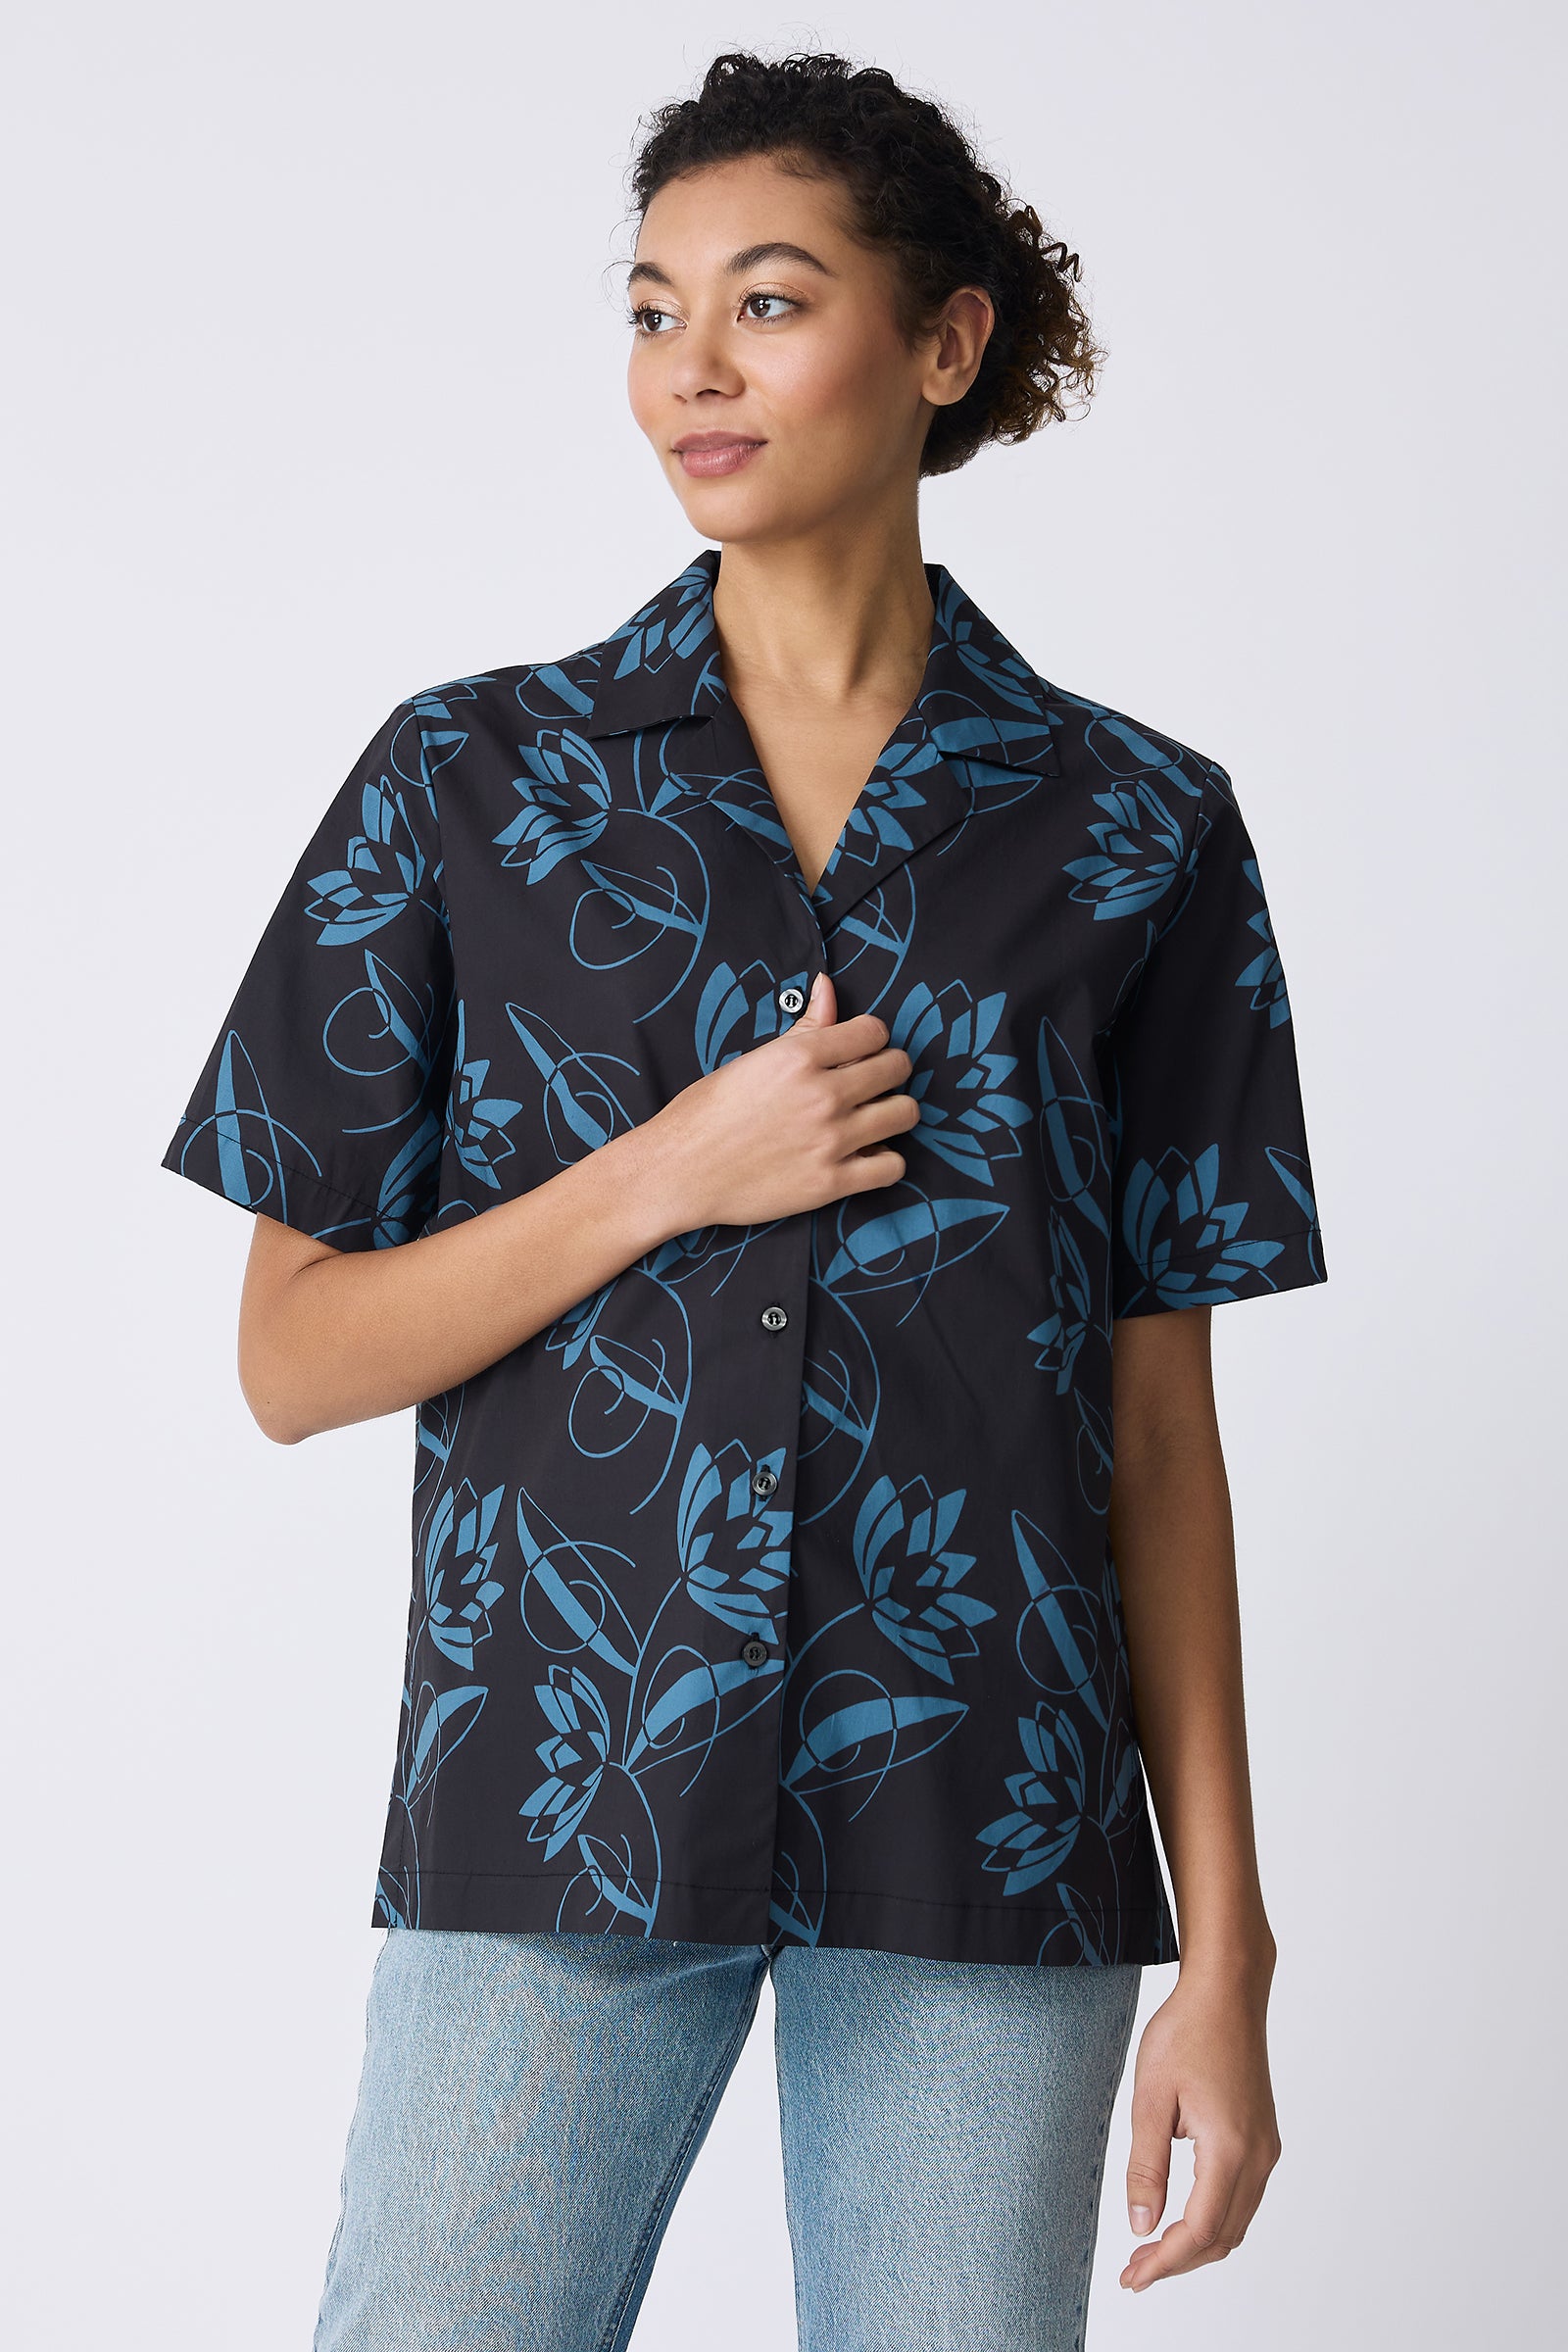 Kal Rieman Vacation Shirt in Lotus Print Blue on model touching shirt front view